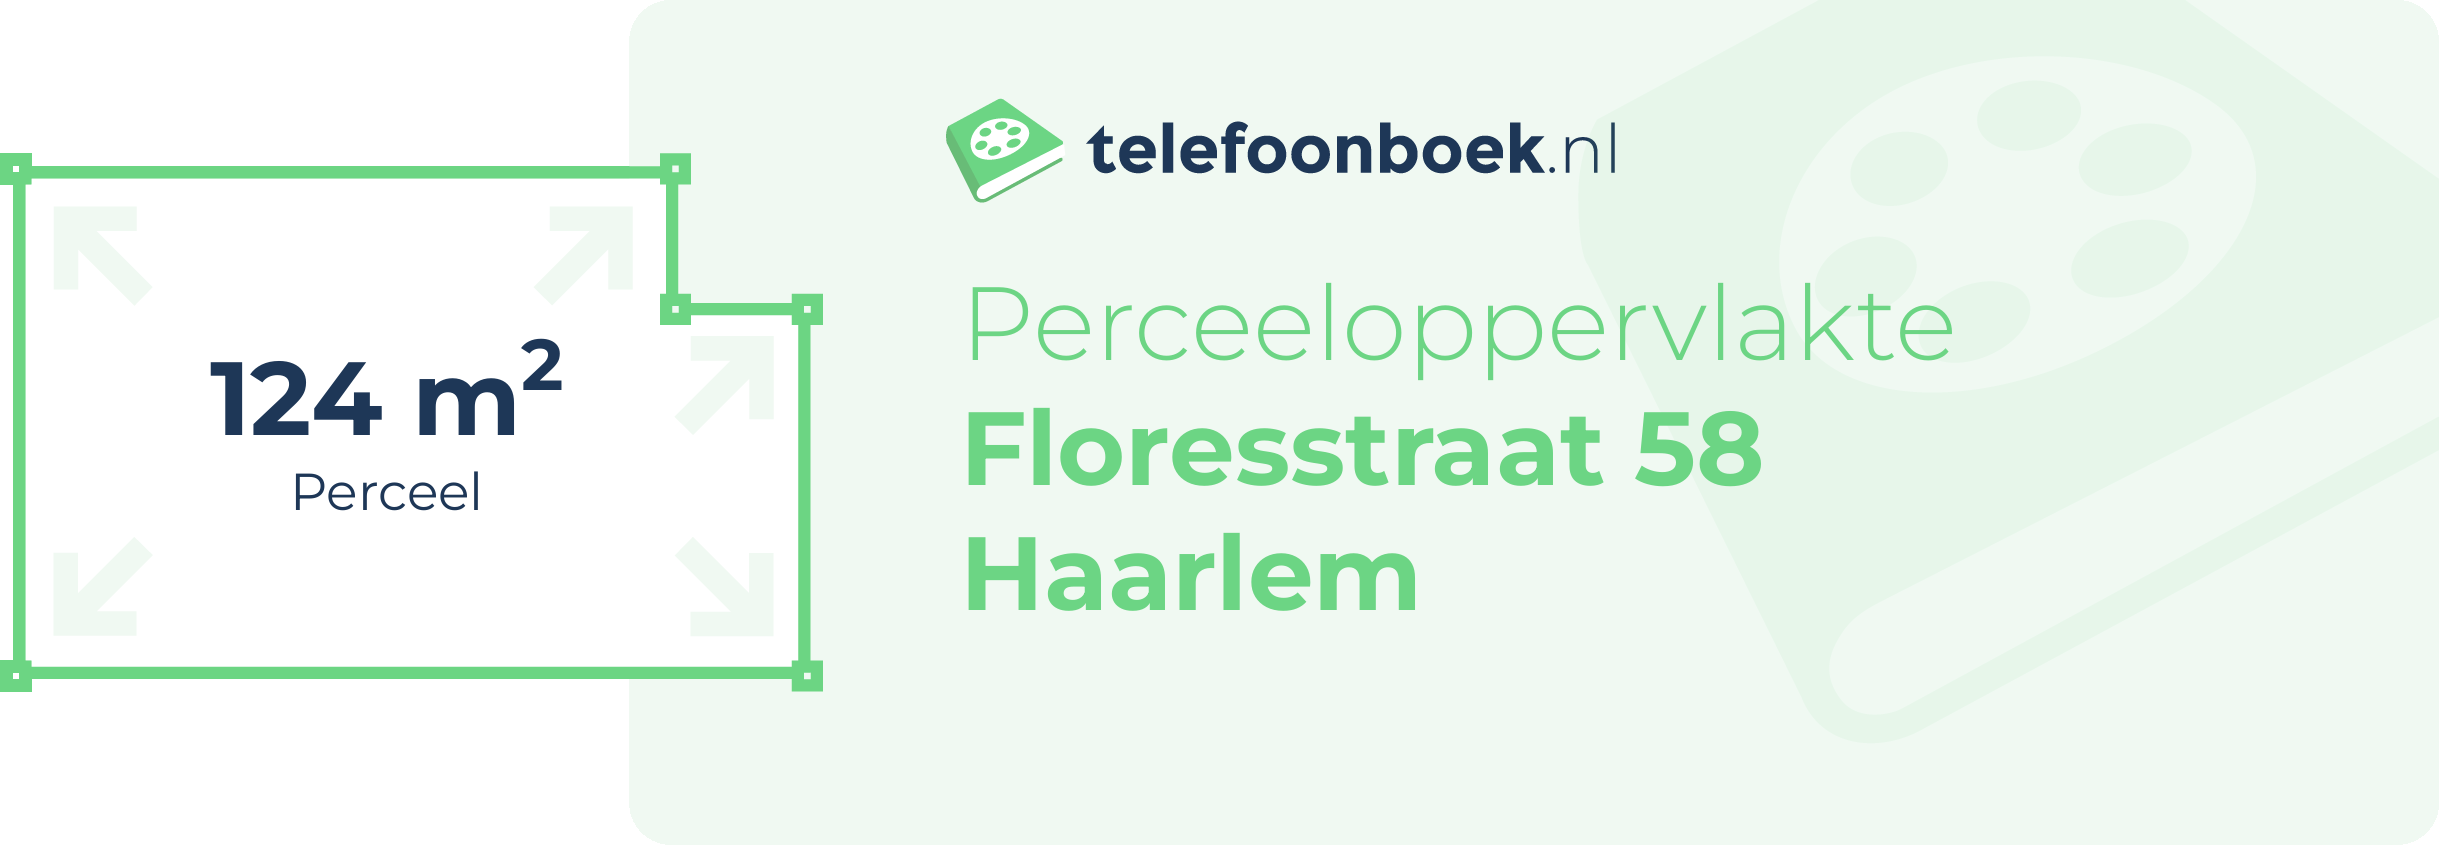 Perceeloppervlakte Floresstraat 58 Haarlem